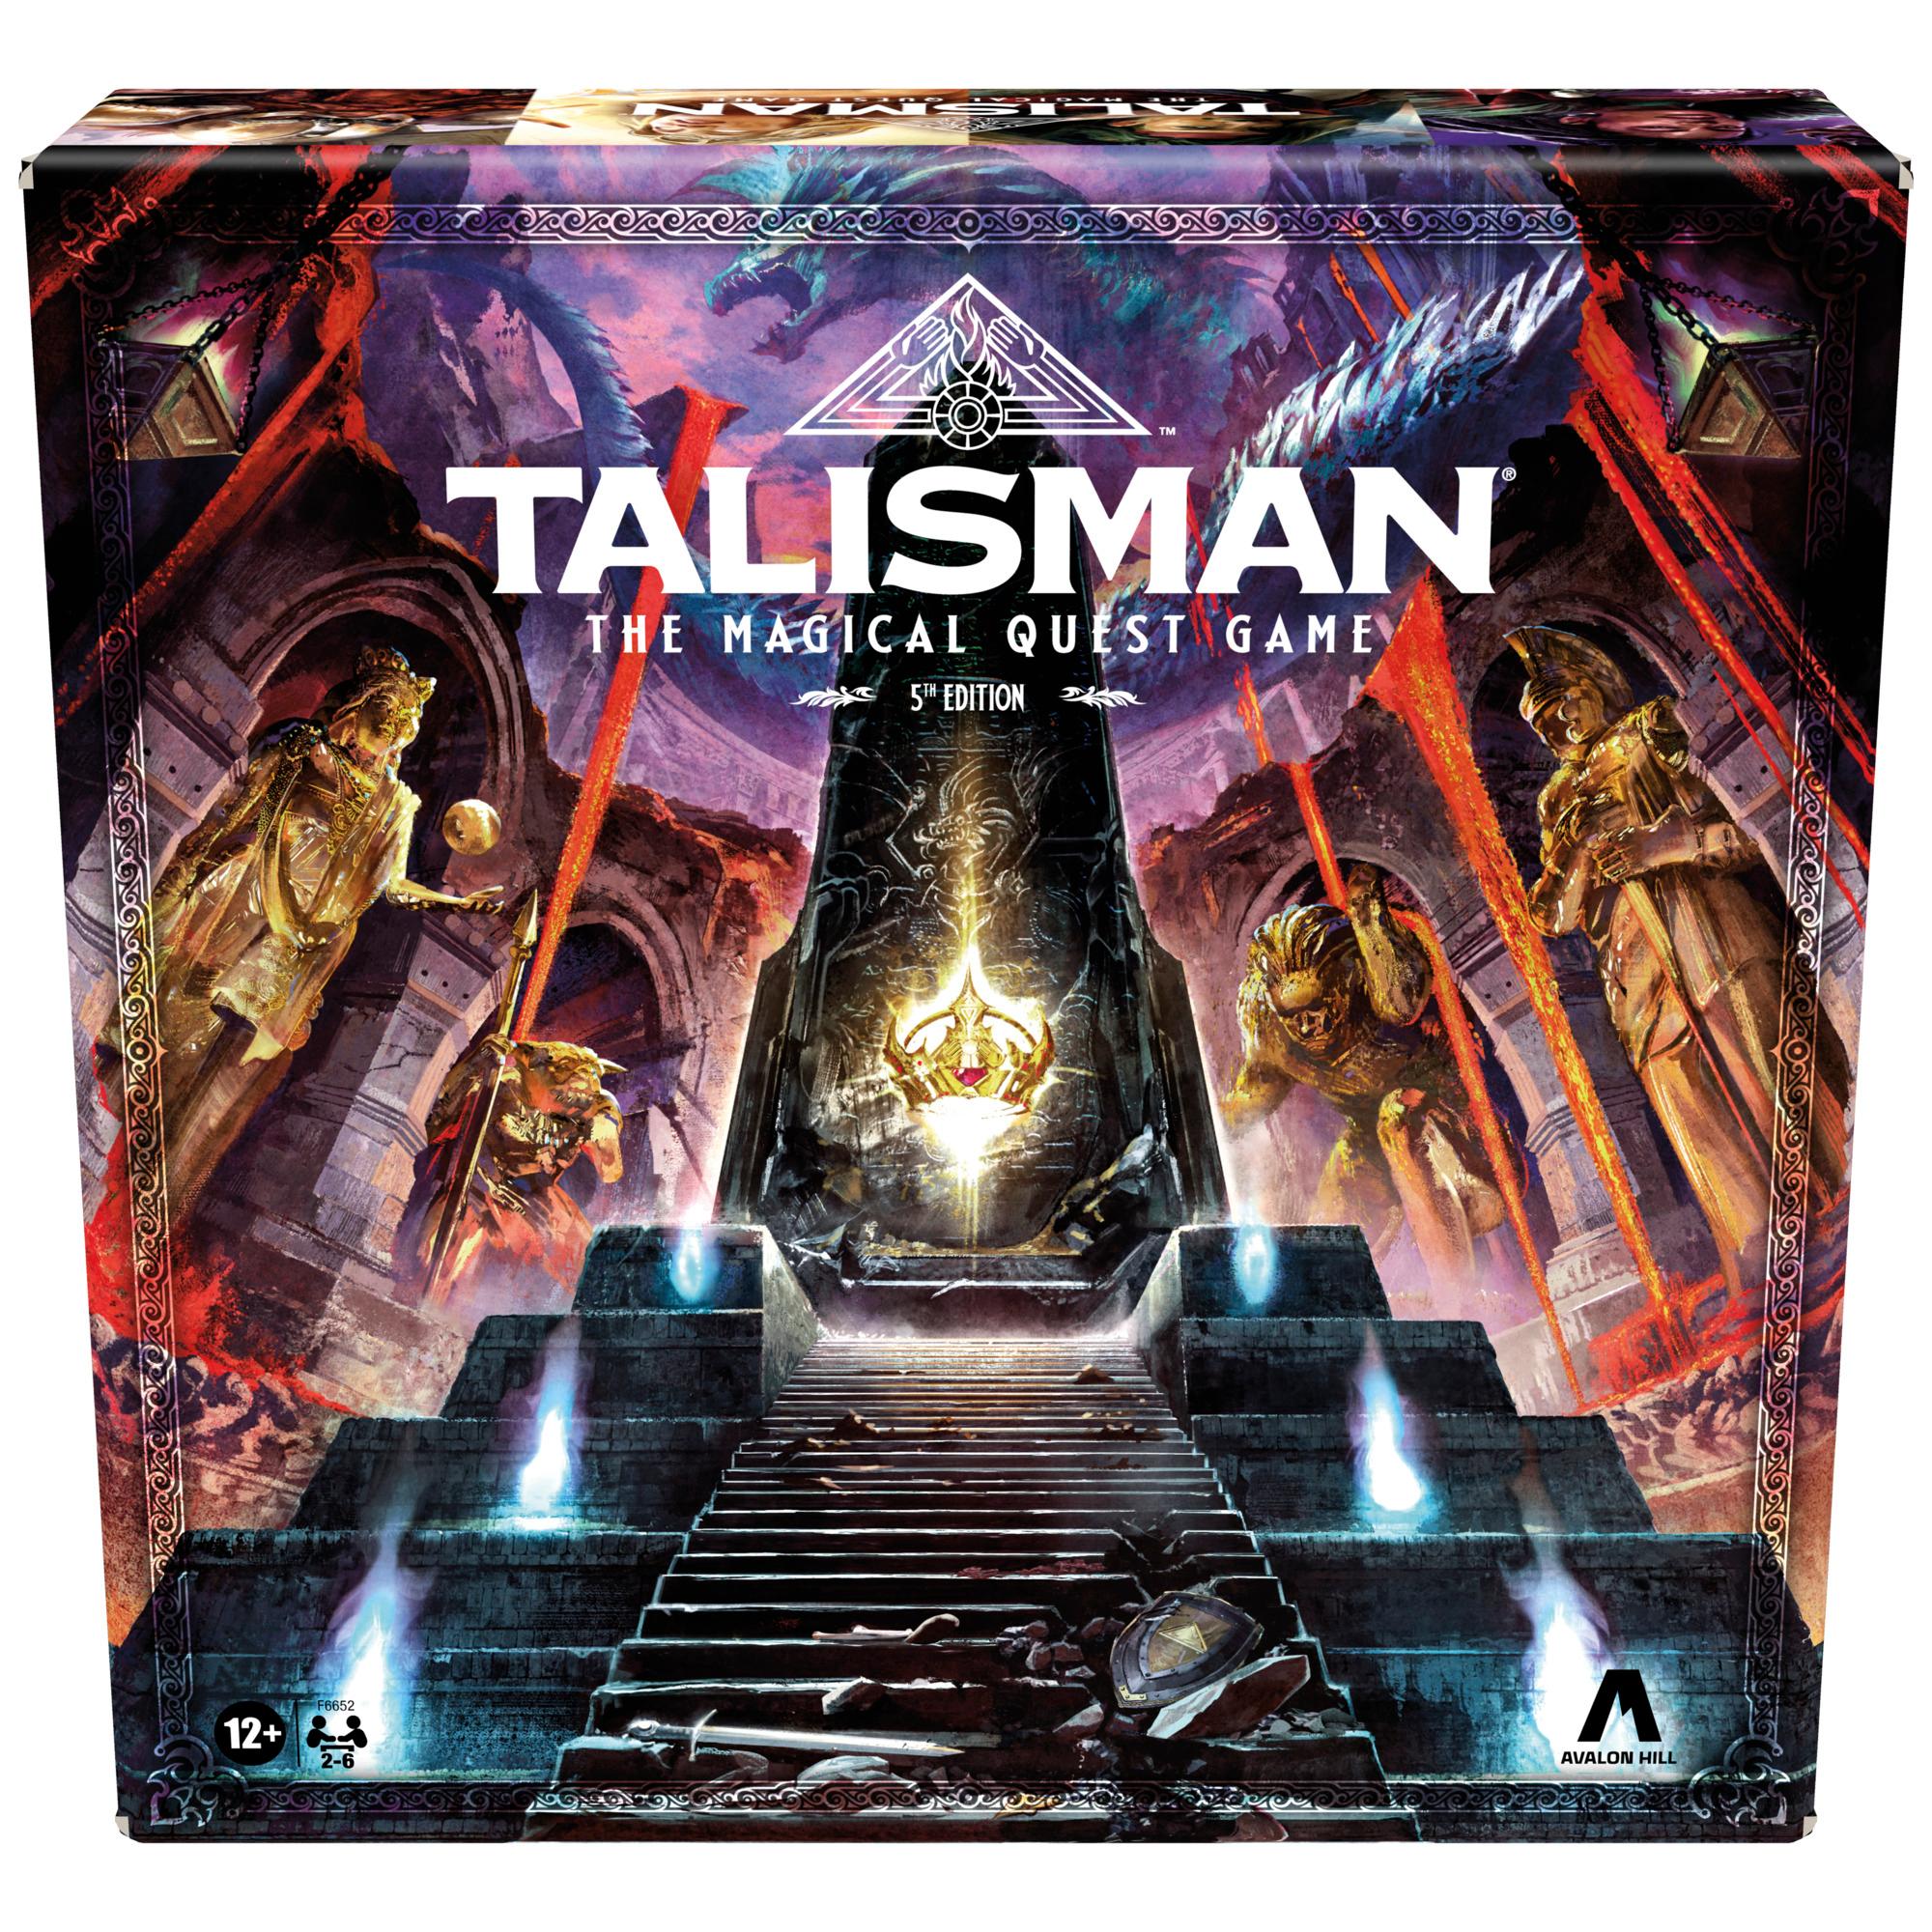 Talisman 5th Edition box